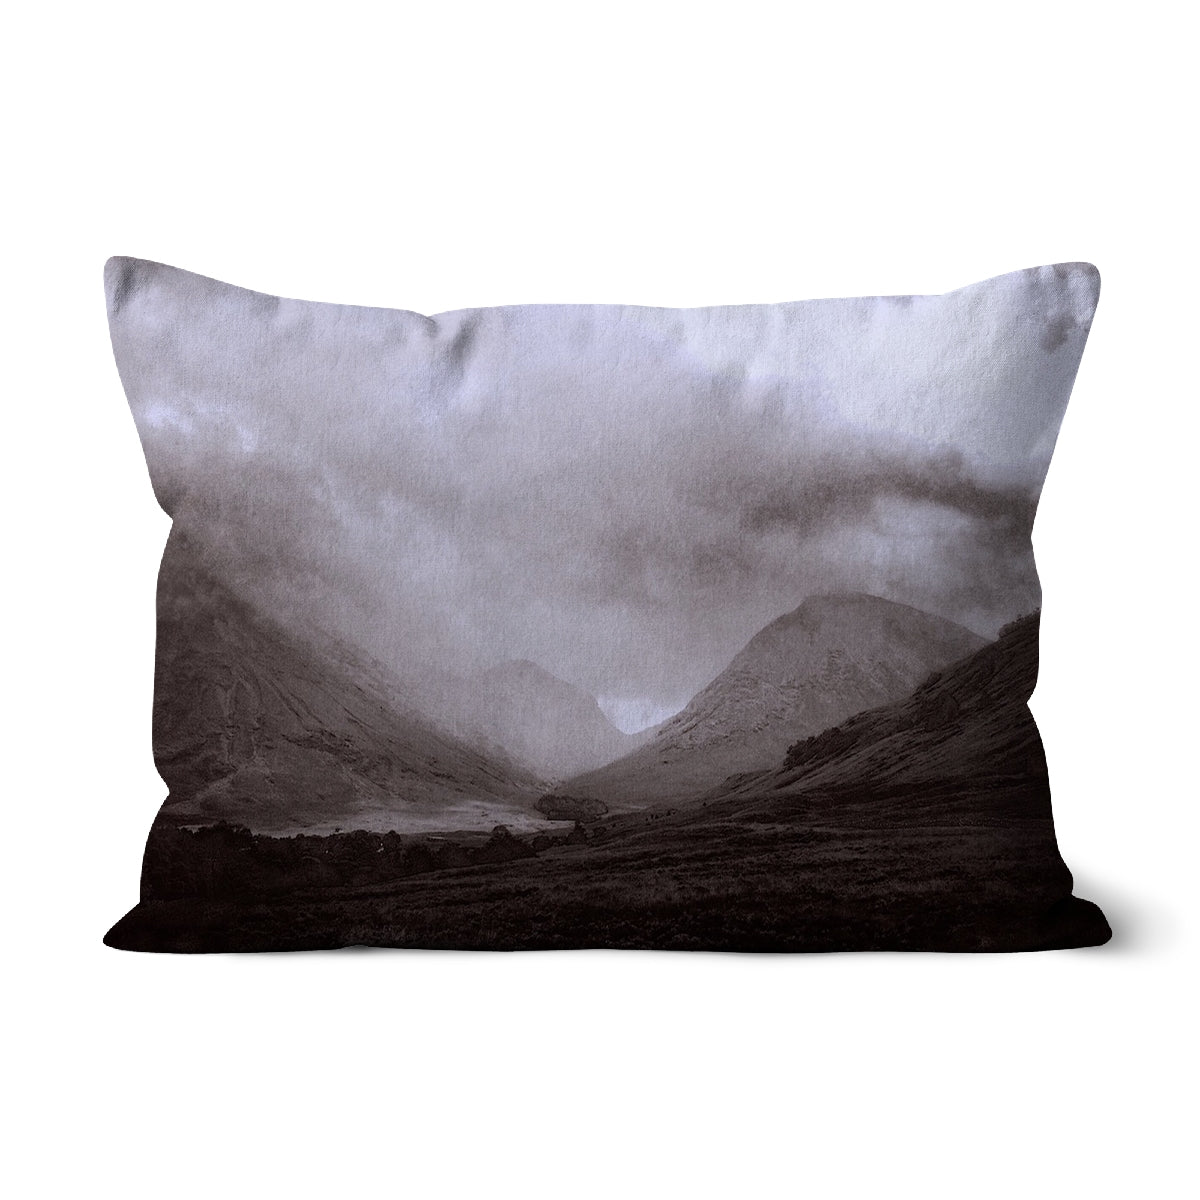 Glencoe Mist Art Gifts Cushion-Cushions-Glencoe Art Gallery-Linen-19"x13"-Paintings, Prints, Homeware, Art Gifts From Scotland By Scottish Artist Kevin Hunter